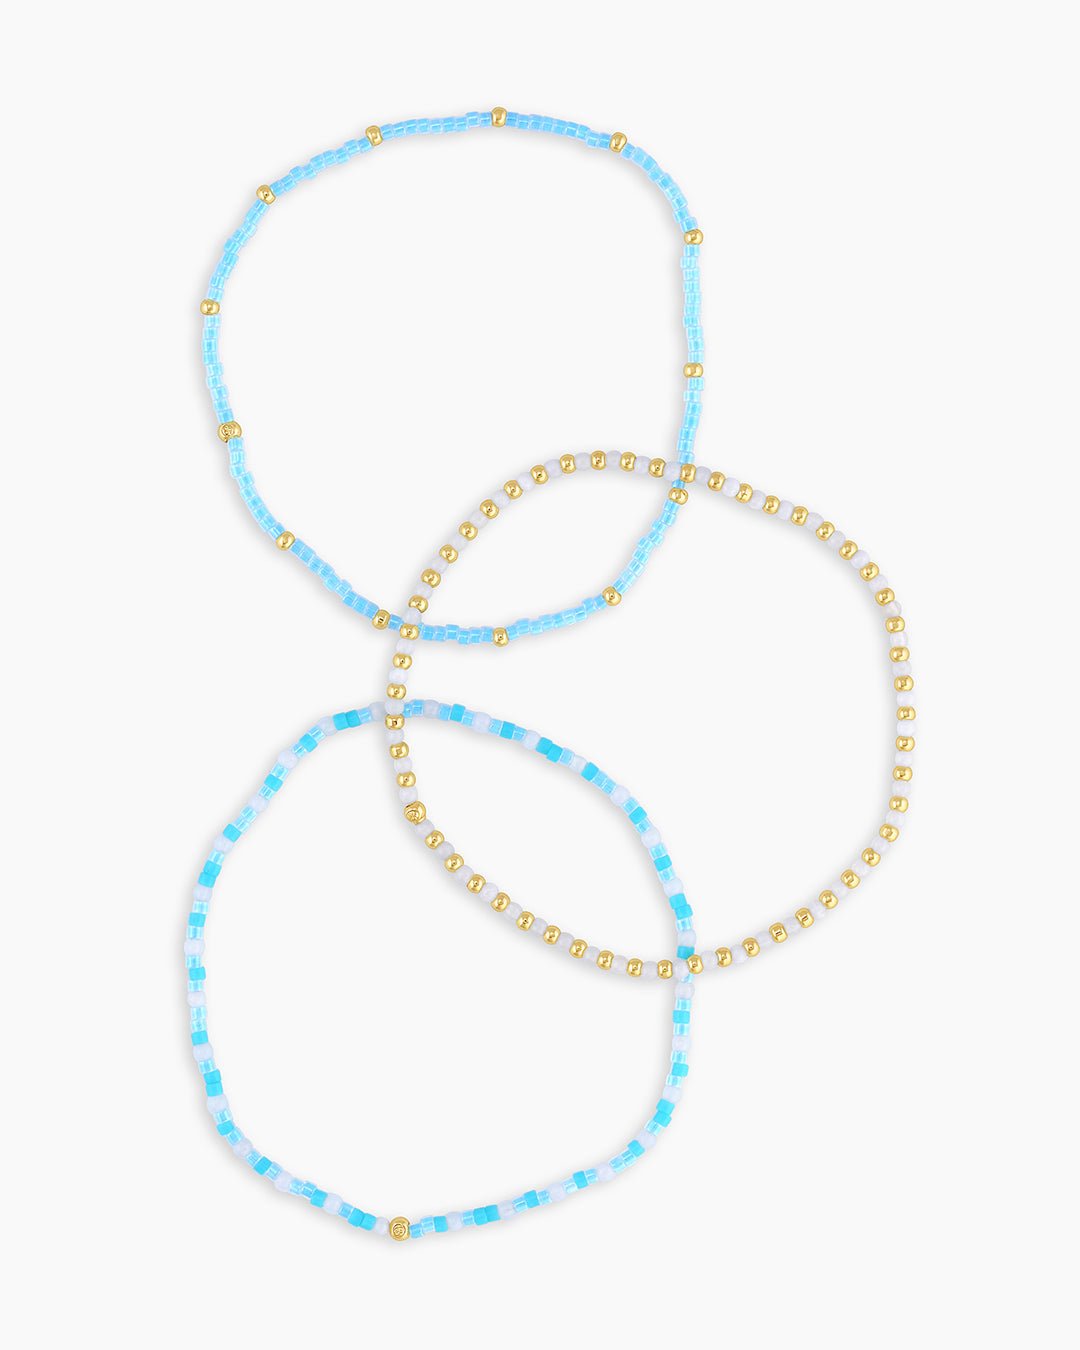 Poppy Gem Bracelet Blue Lace Agate || option::Gold Plated, Blue Lace Agate